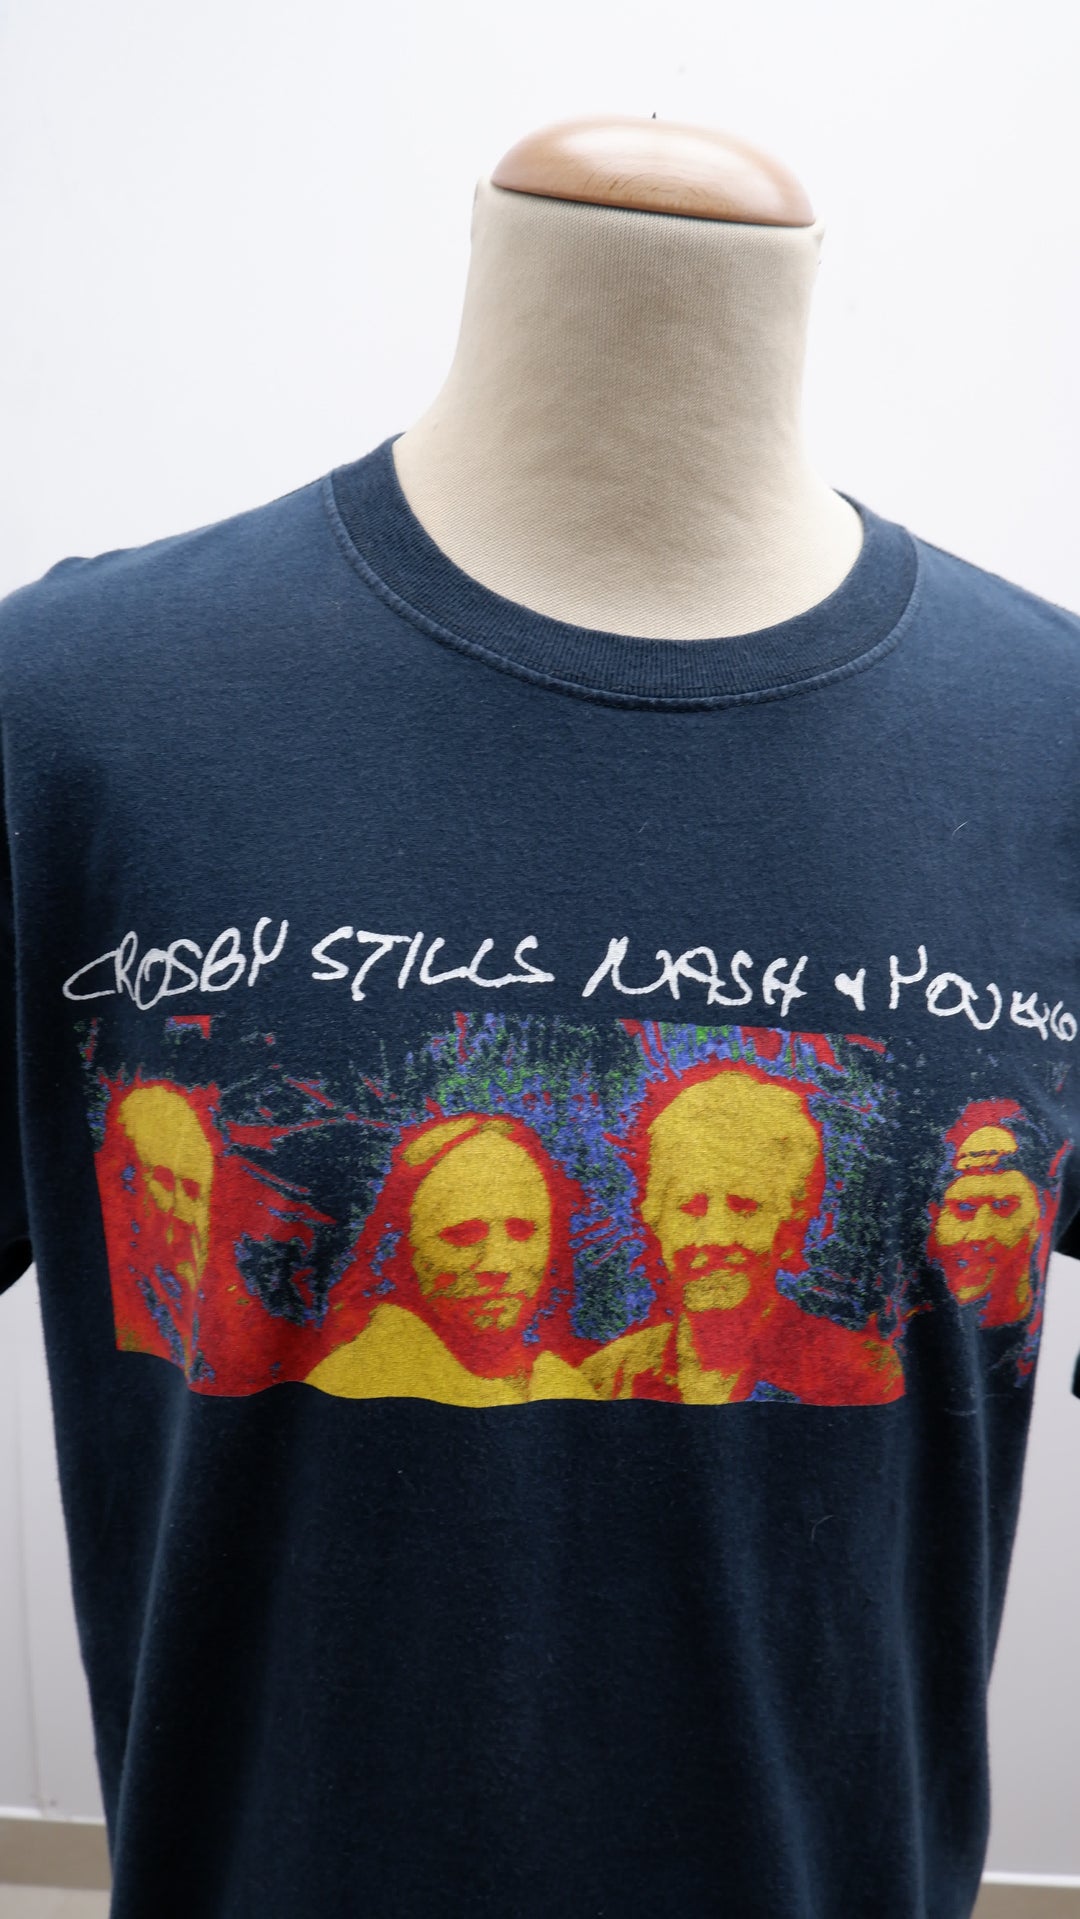 Crosby Still Nash & Young Looking Forward To Vintage T-Shirt